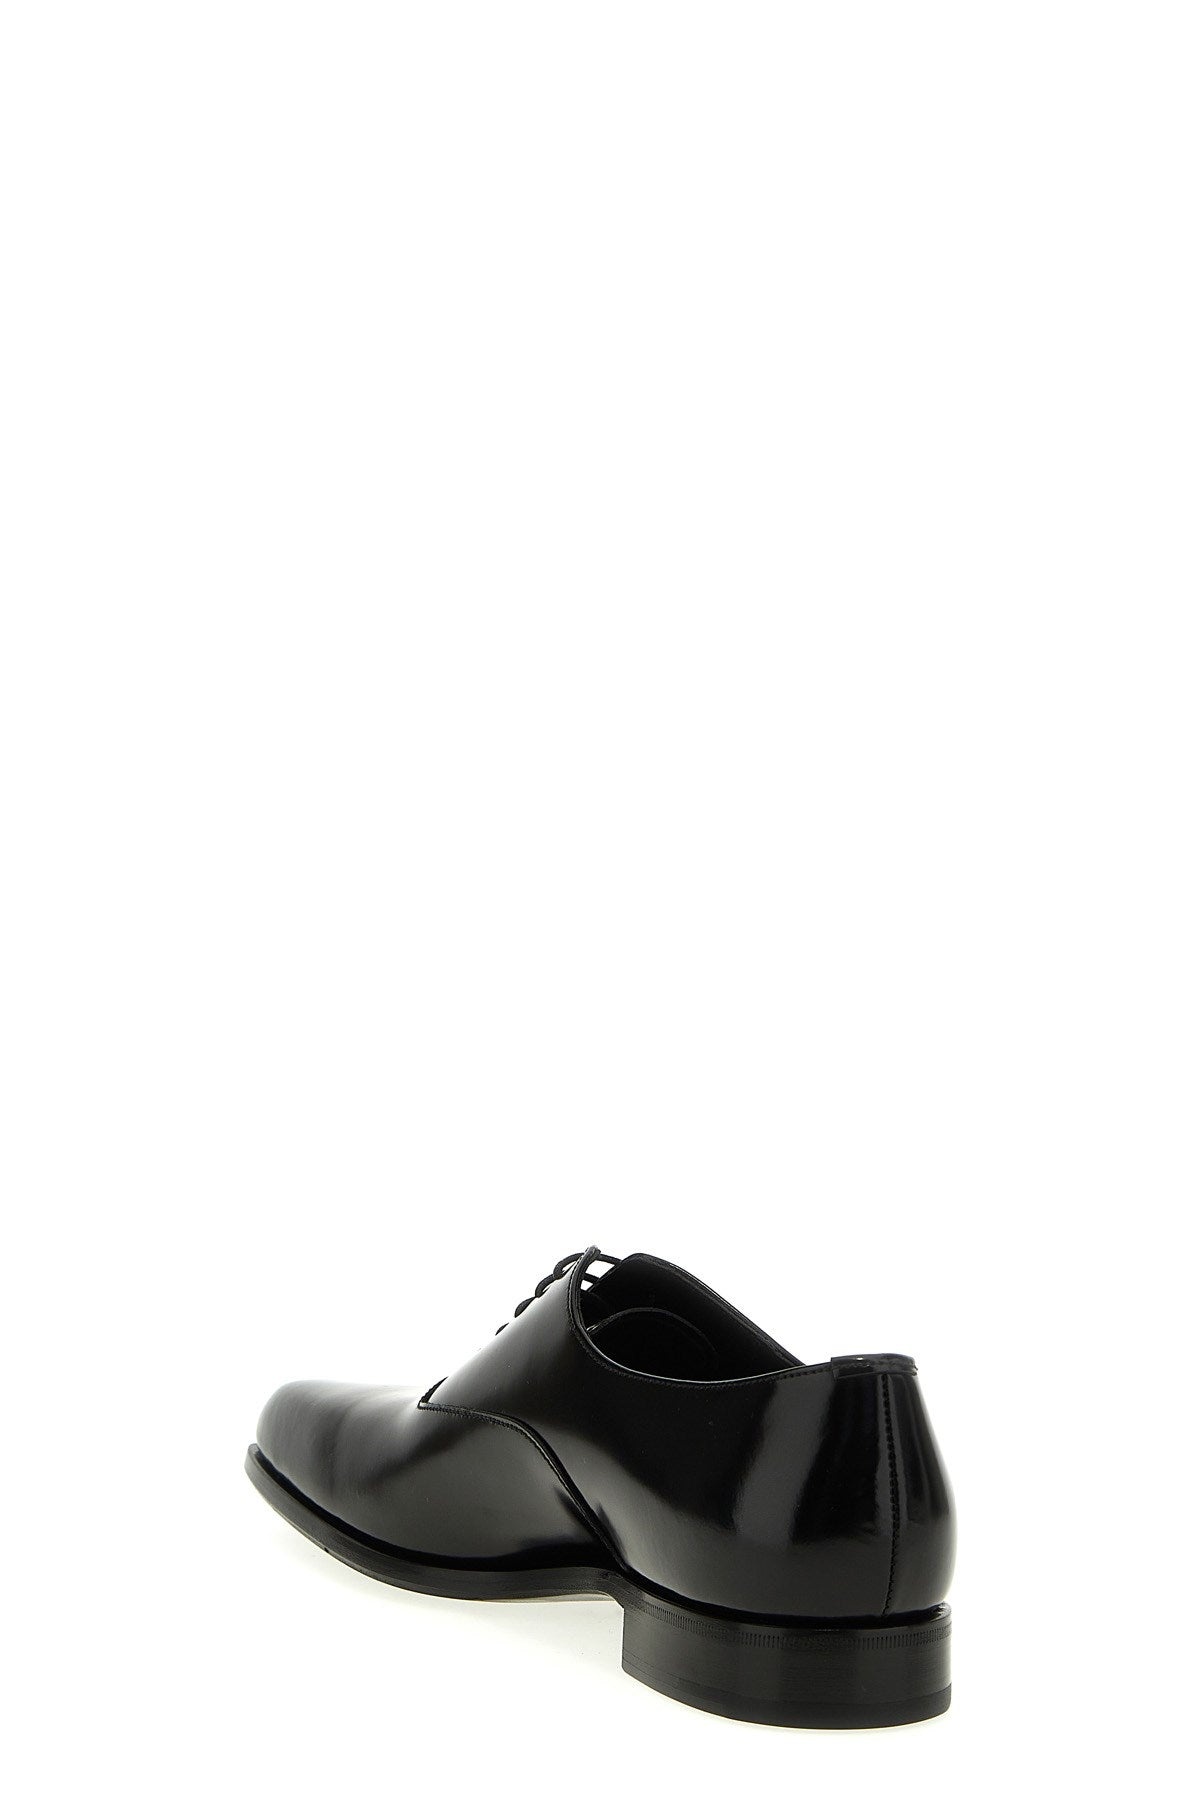 Prada Men 'Oxford' Lace Up Shoes - 2